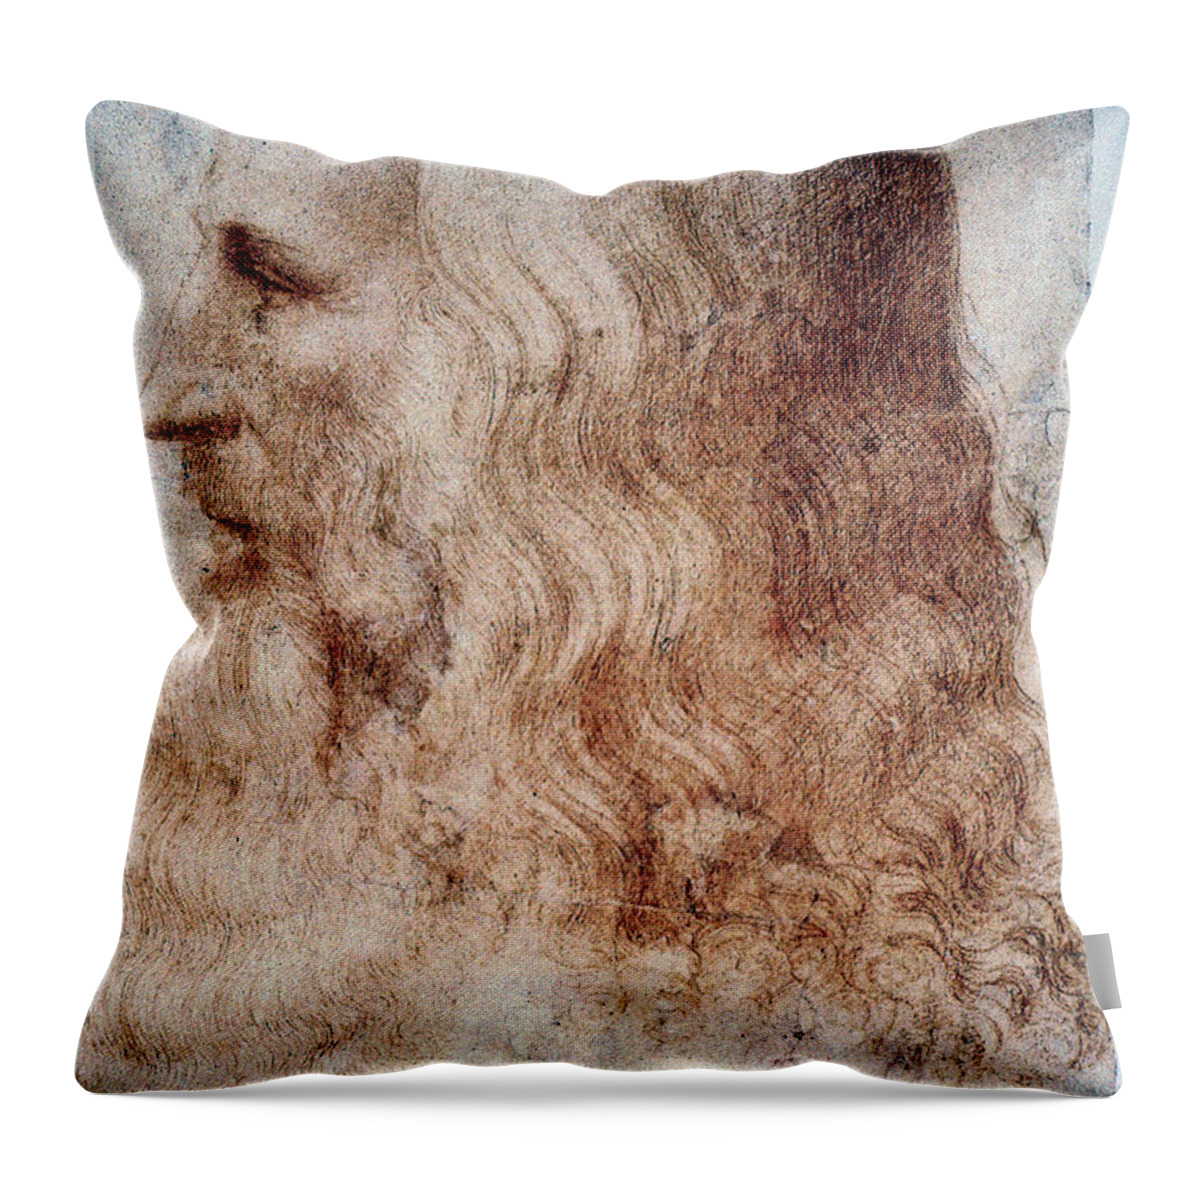 16th Century Throw Pillow featuring the photograph Leonardo Da Vinci #1 by Granger